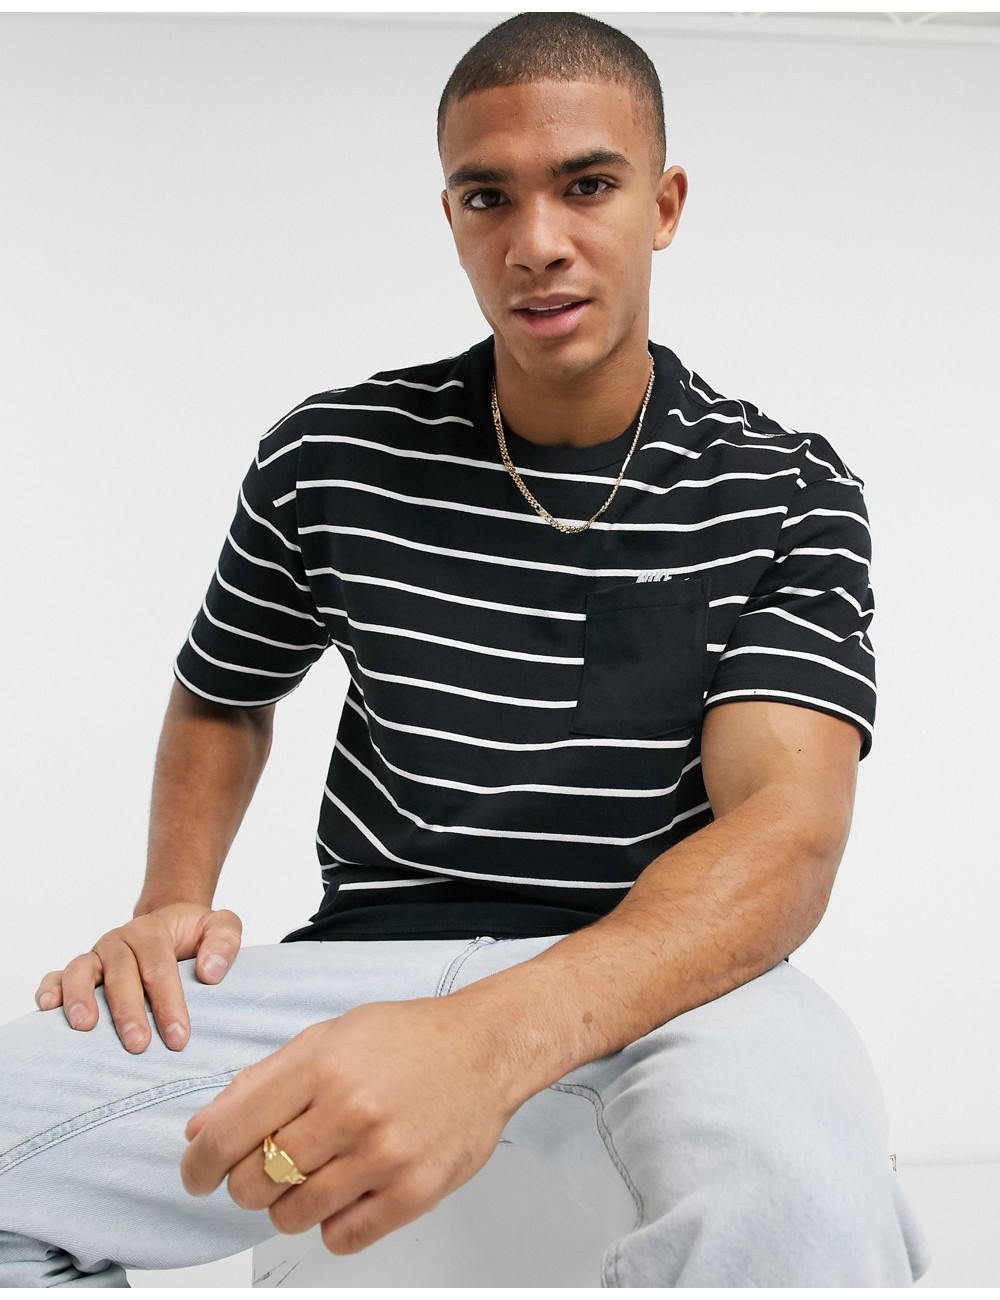 Nike stripe t-shirt in black